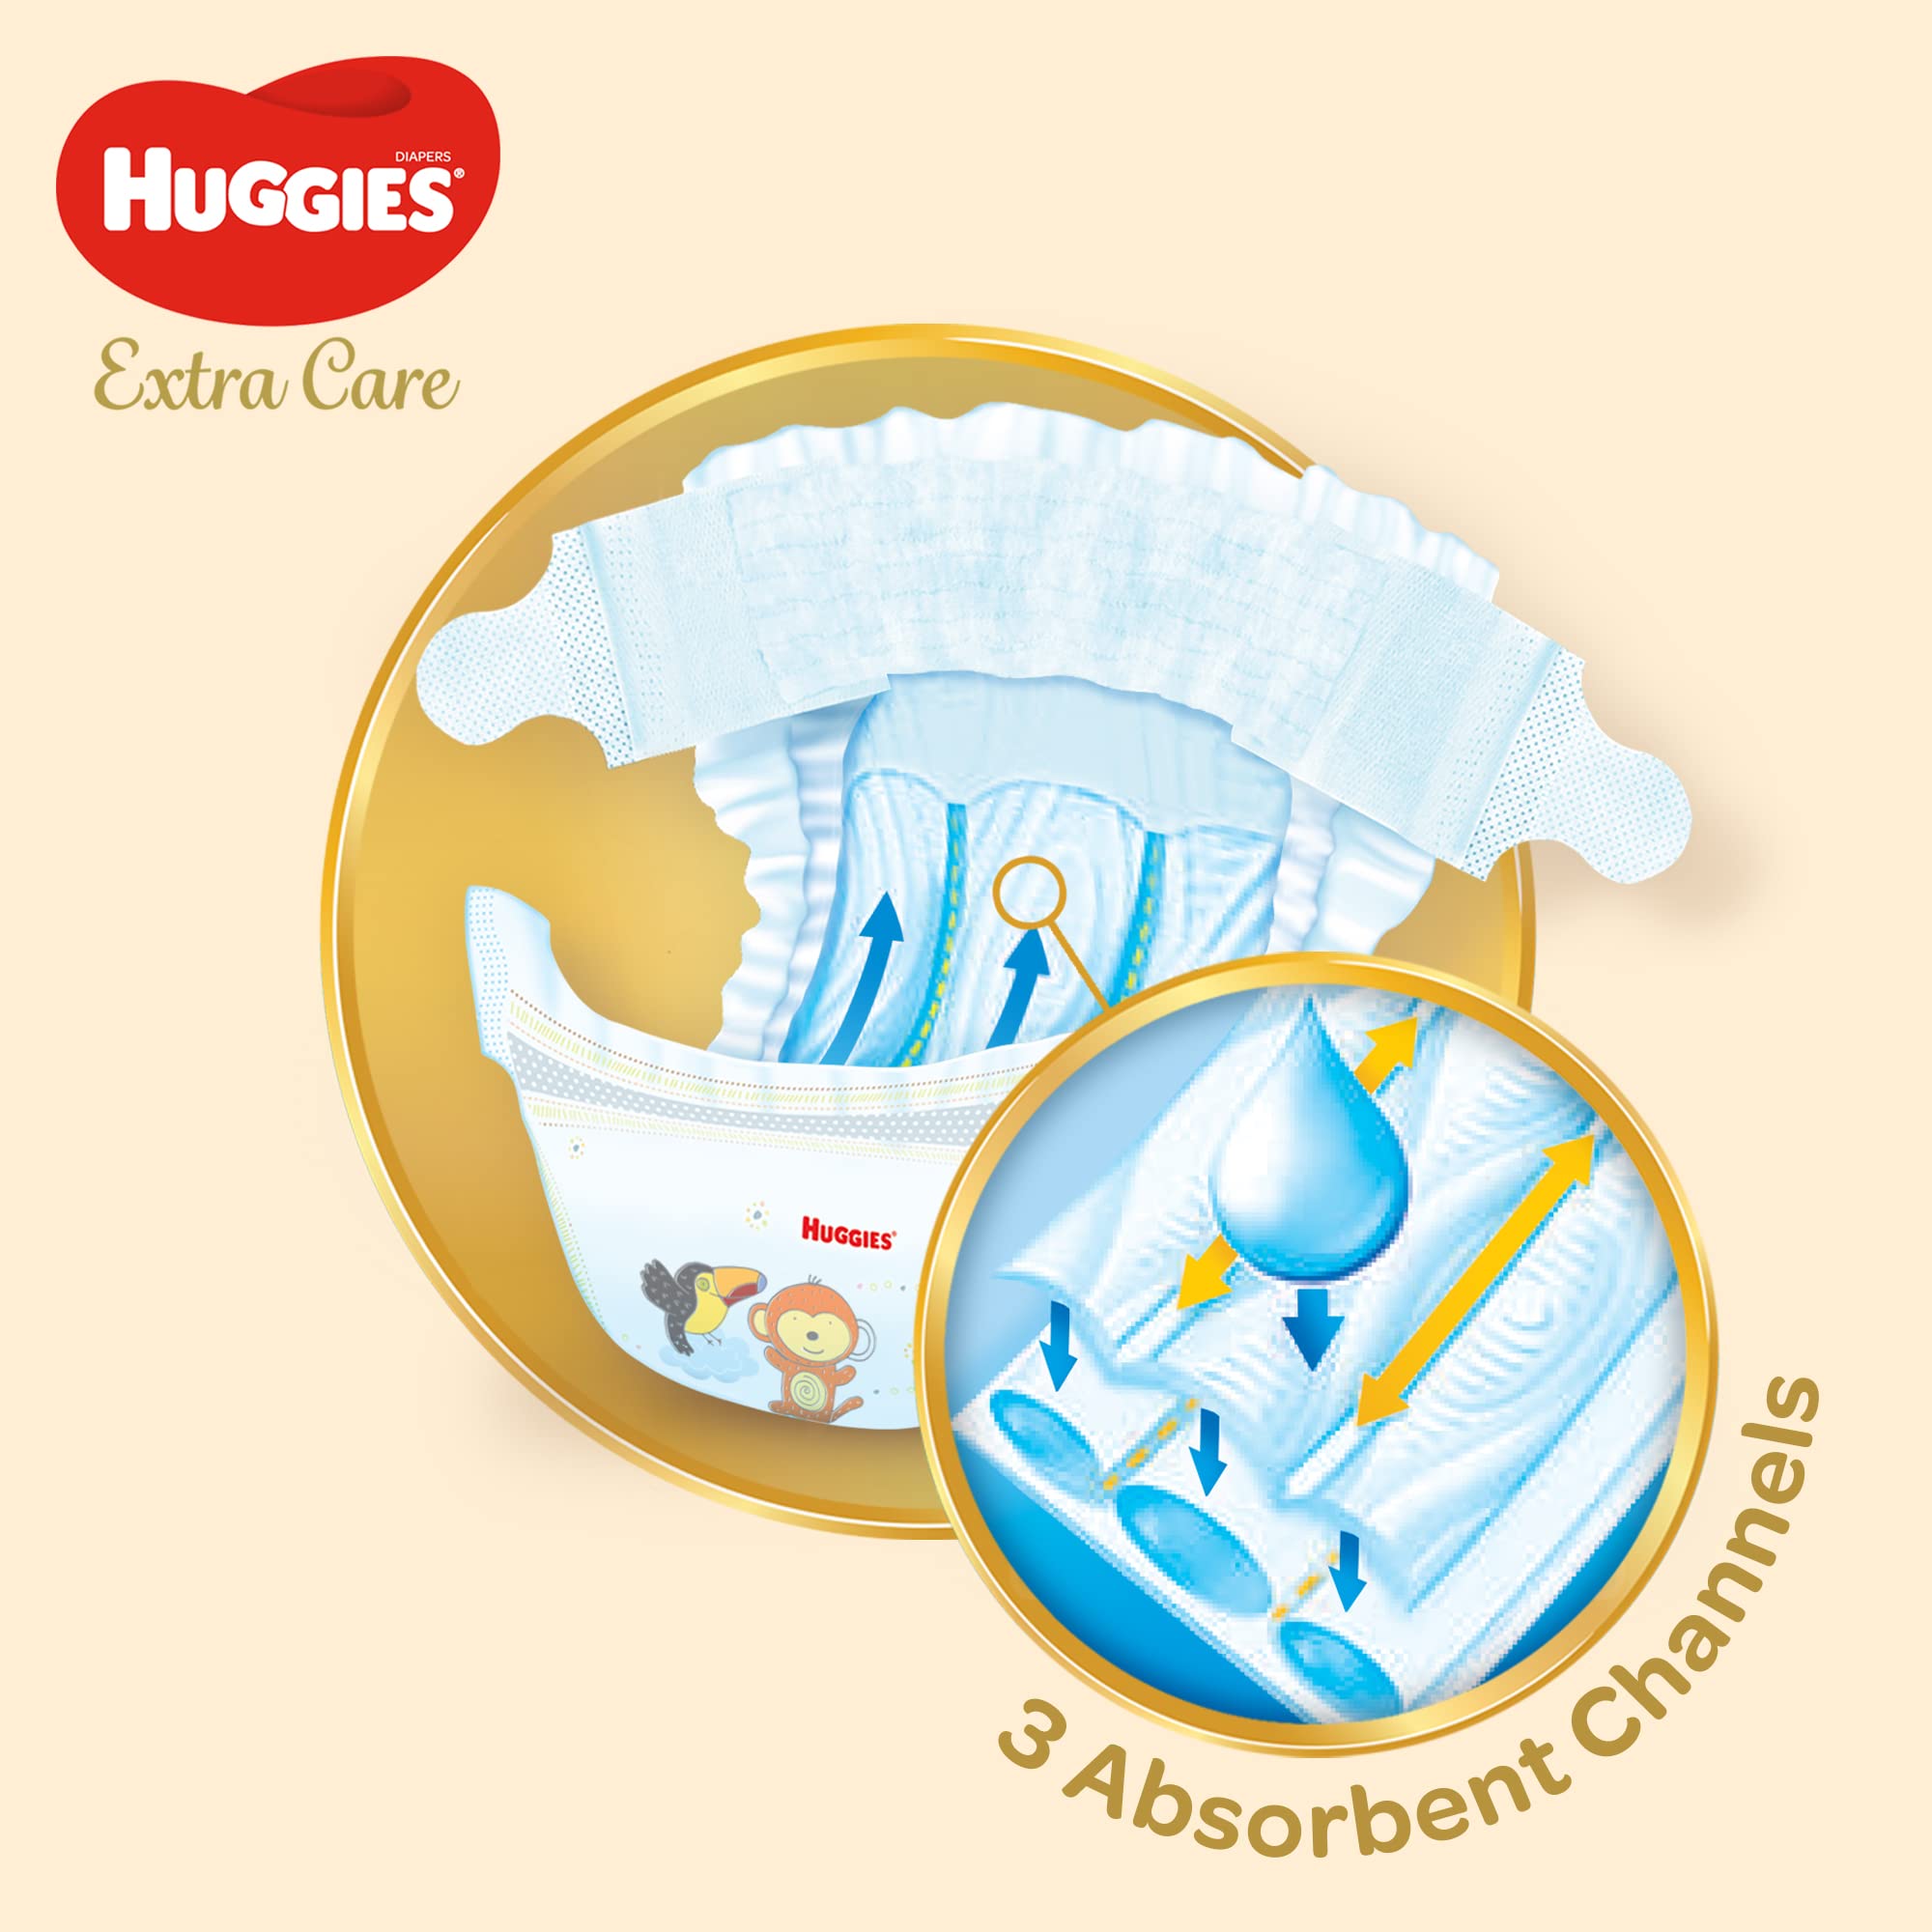 Huggies Extra Care Diaper Size 3 4-9kg 42pcs حفاضات اكسترا كير من هاجيز، مقاس 3، 4-9 كغم، 42 قطعة